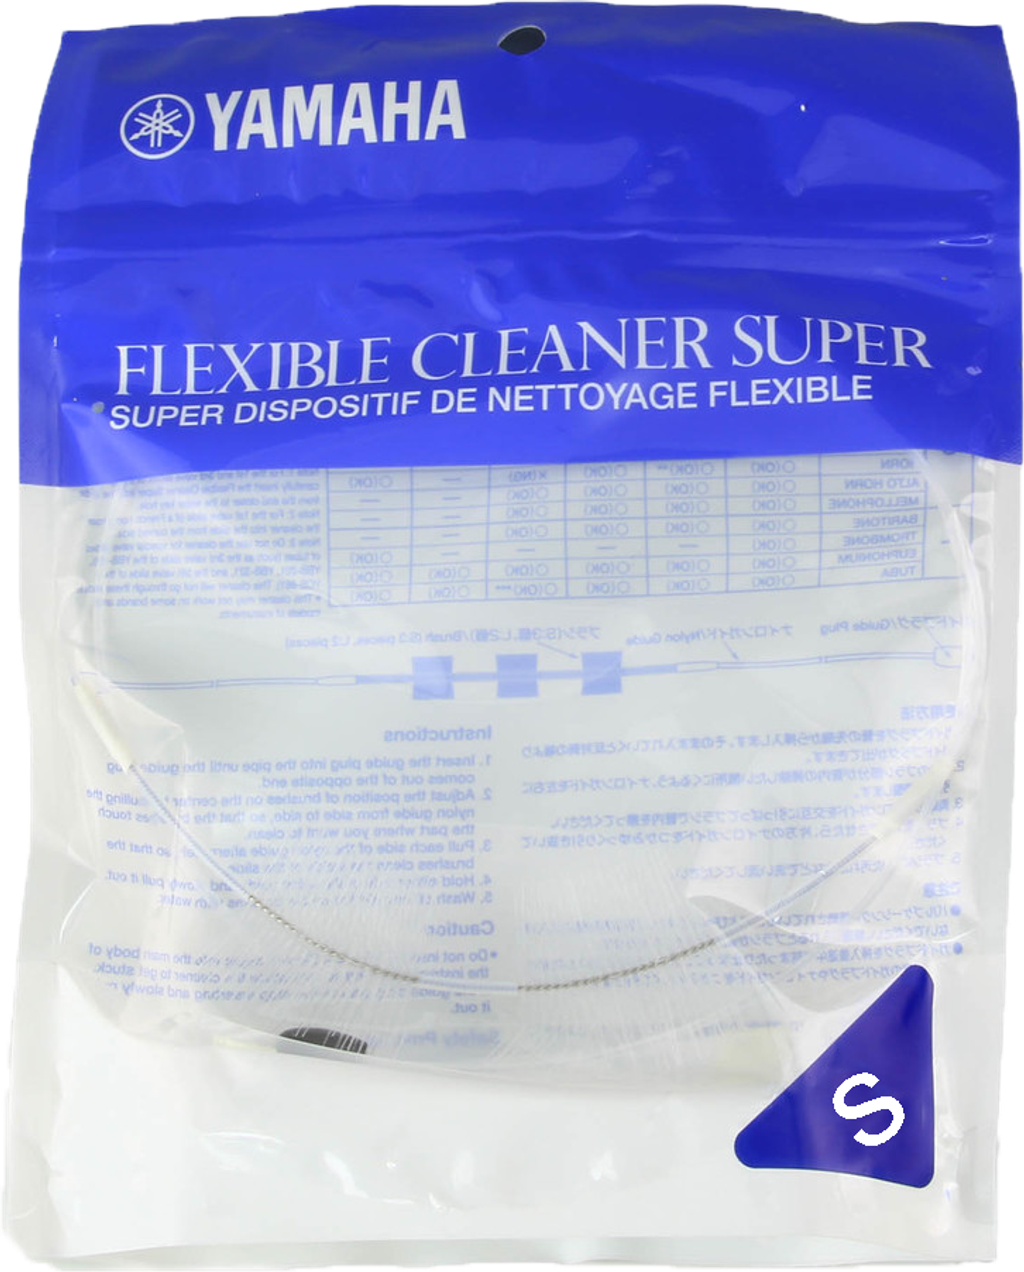 FLEXIBLE CLEANER SUPER S